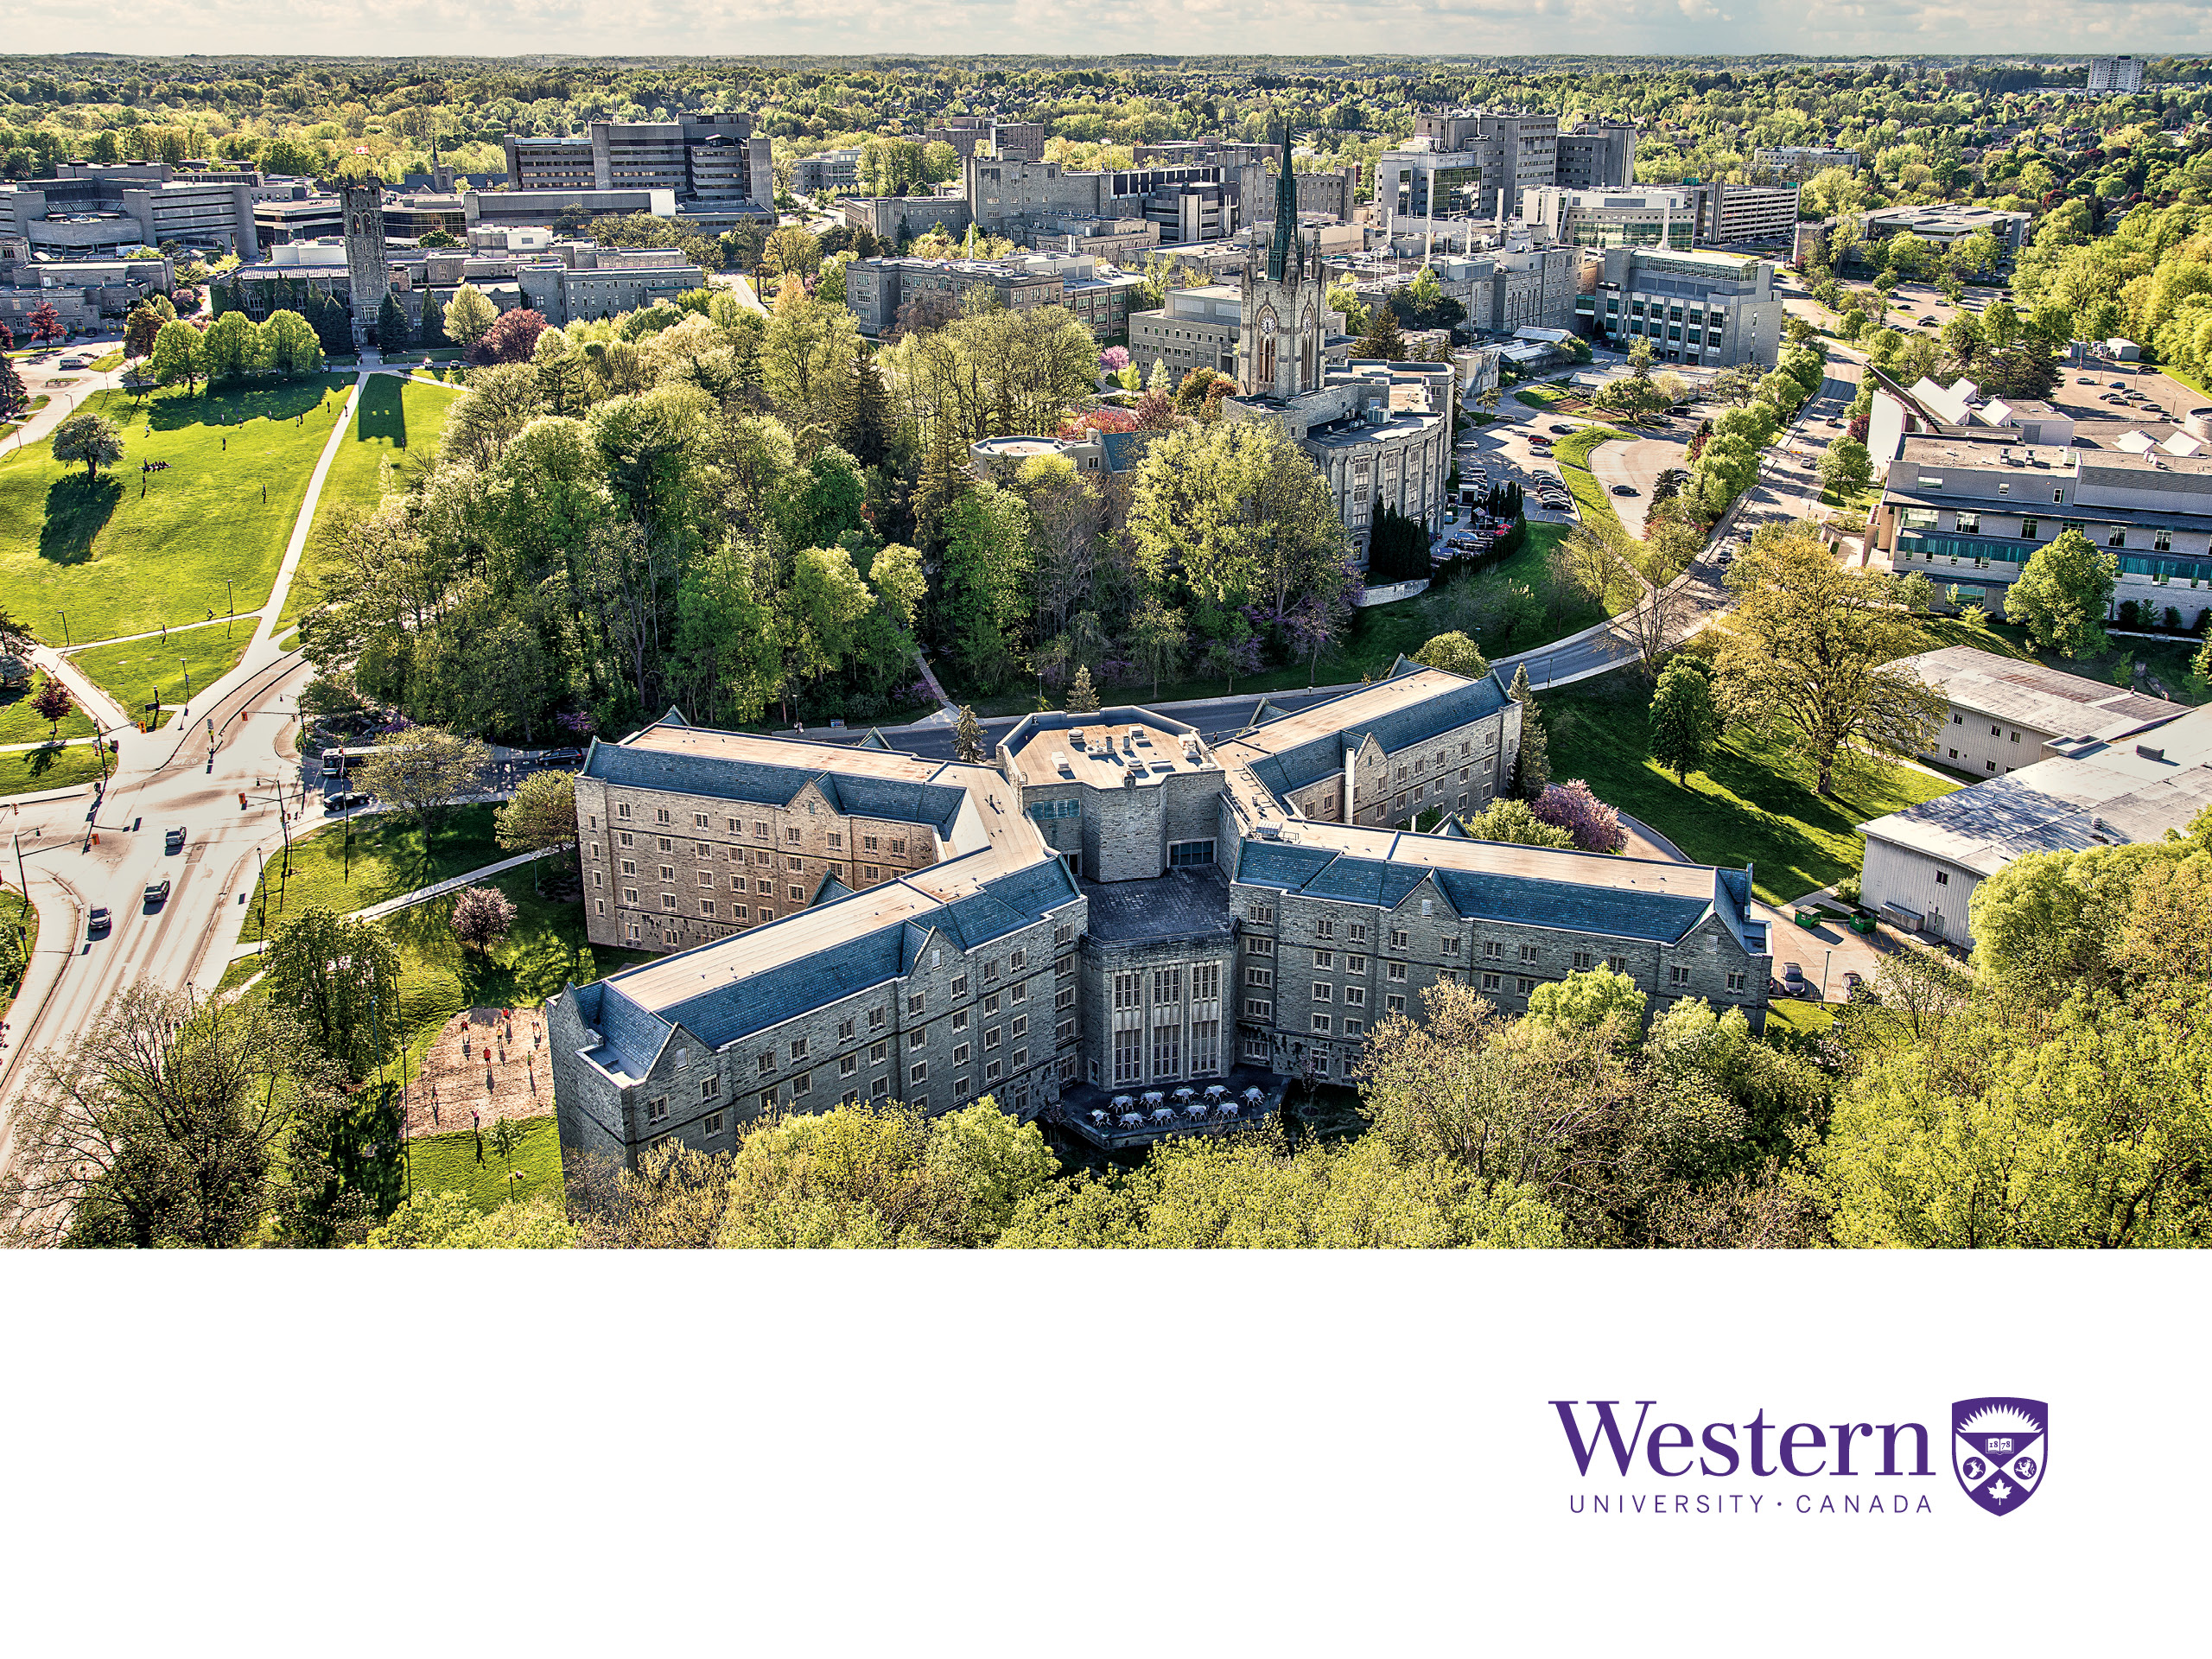 Western Spirit University